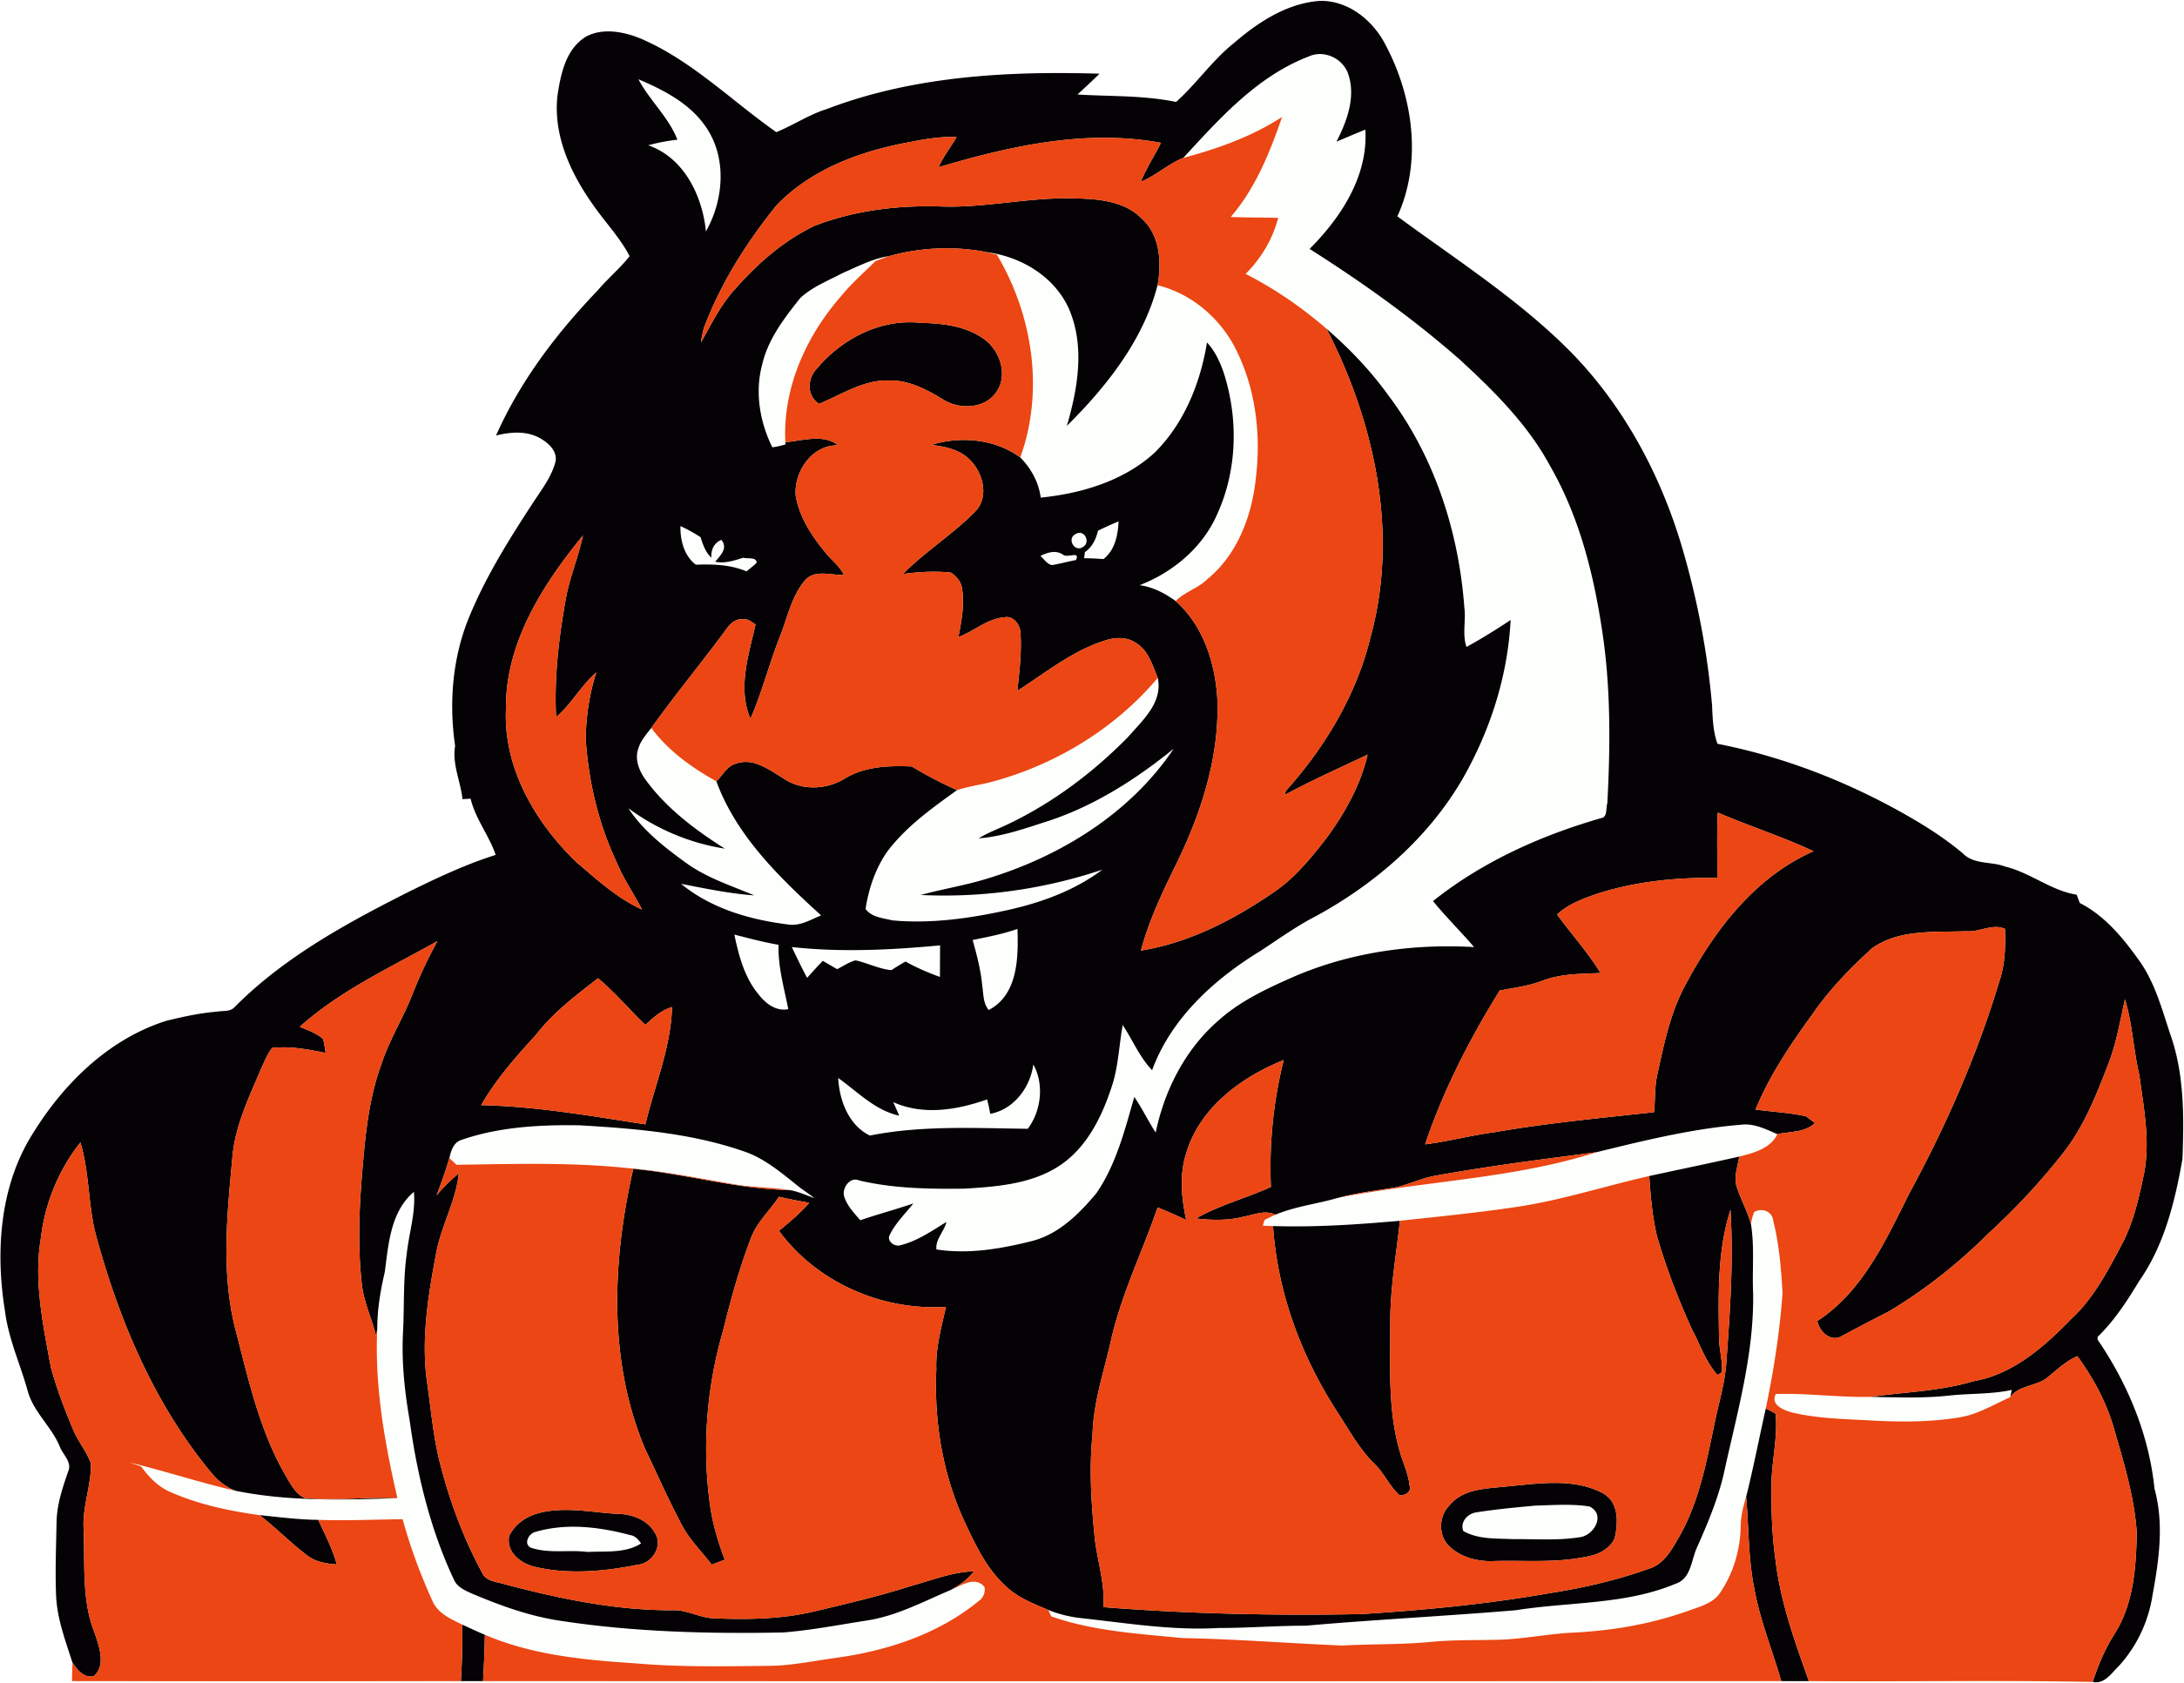 Cincinnati Bengals Steroids Logo fabric transfer